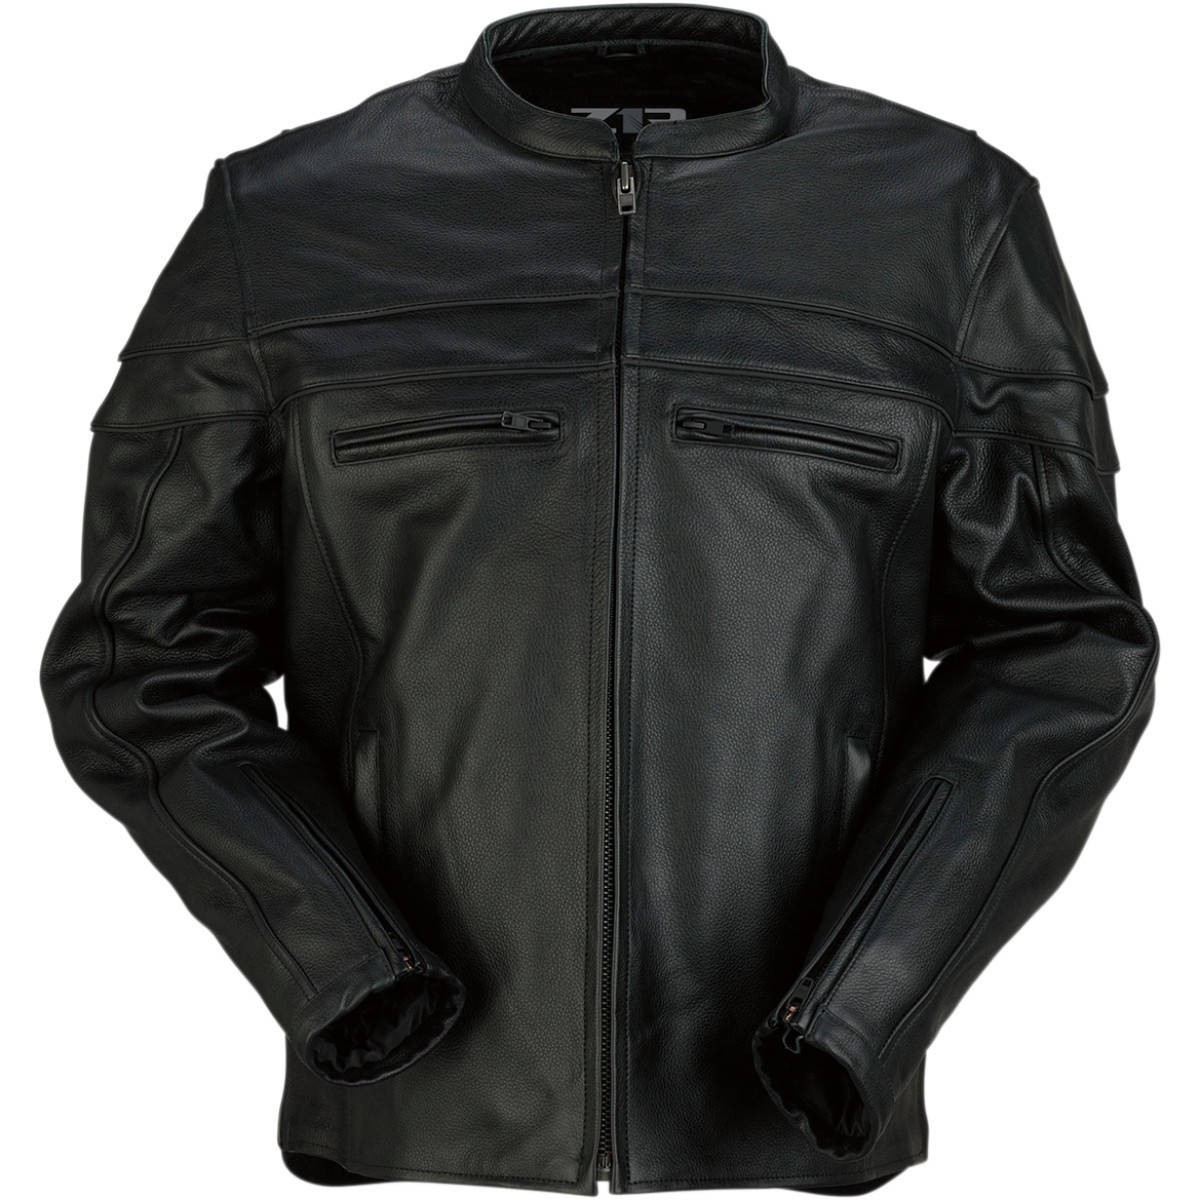 Z1R Bastion Leather Jacket - Leather - Motorcycle Jackets - Motorcycle ...